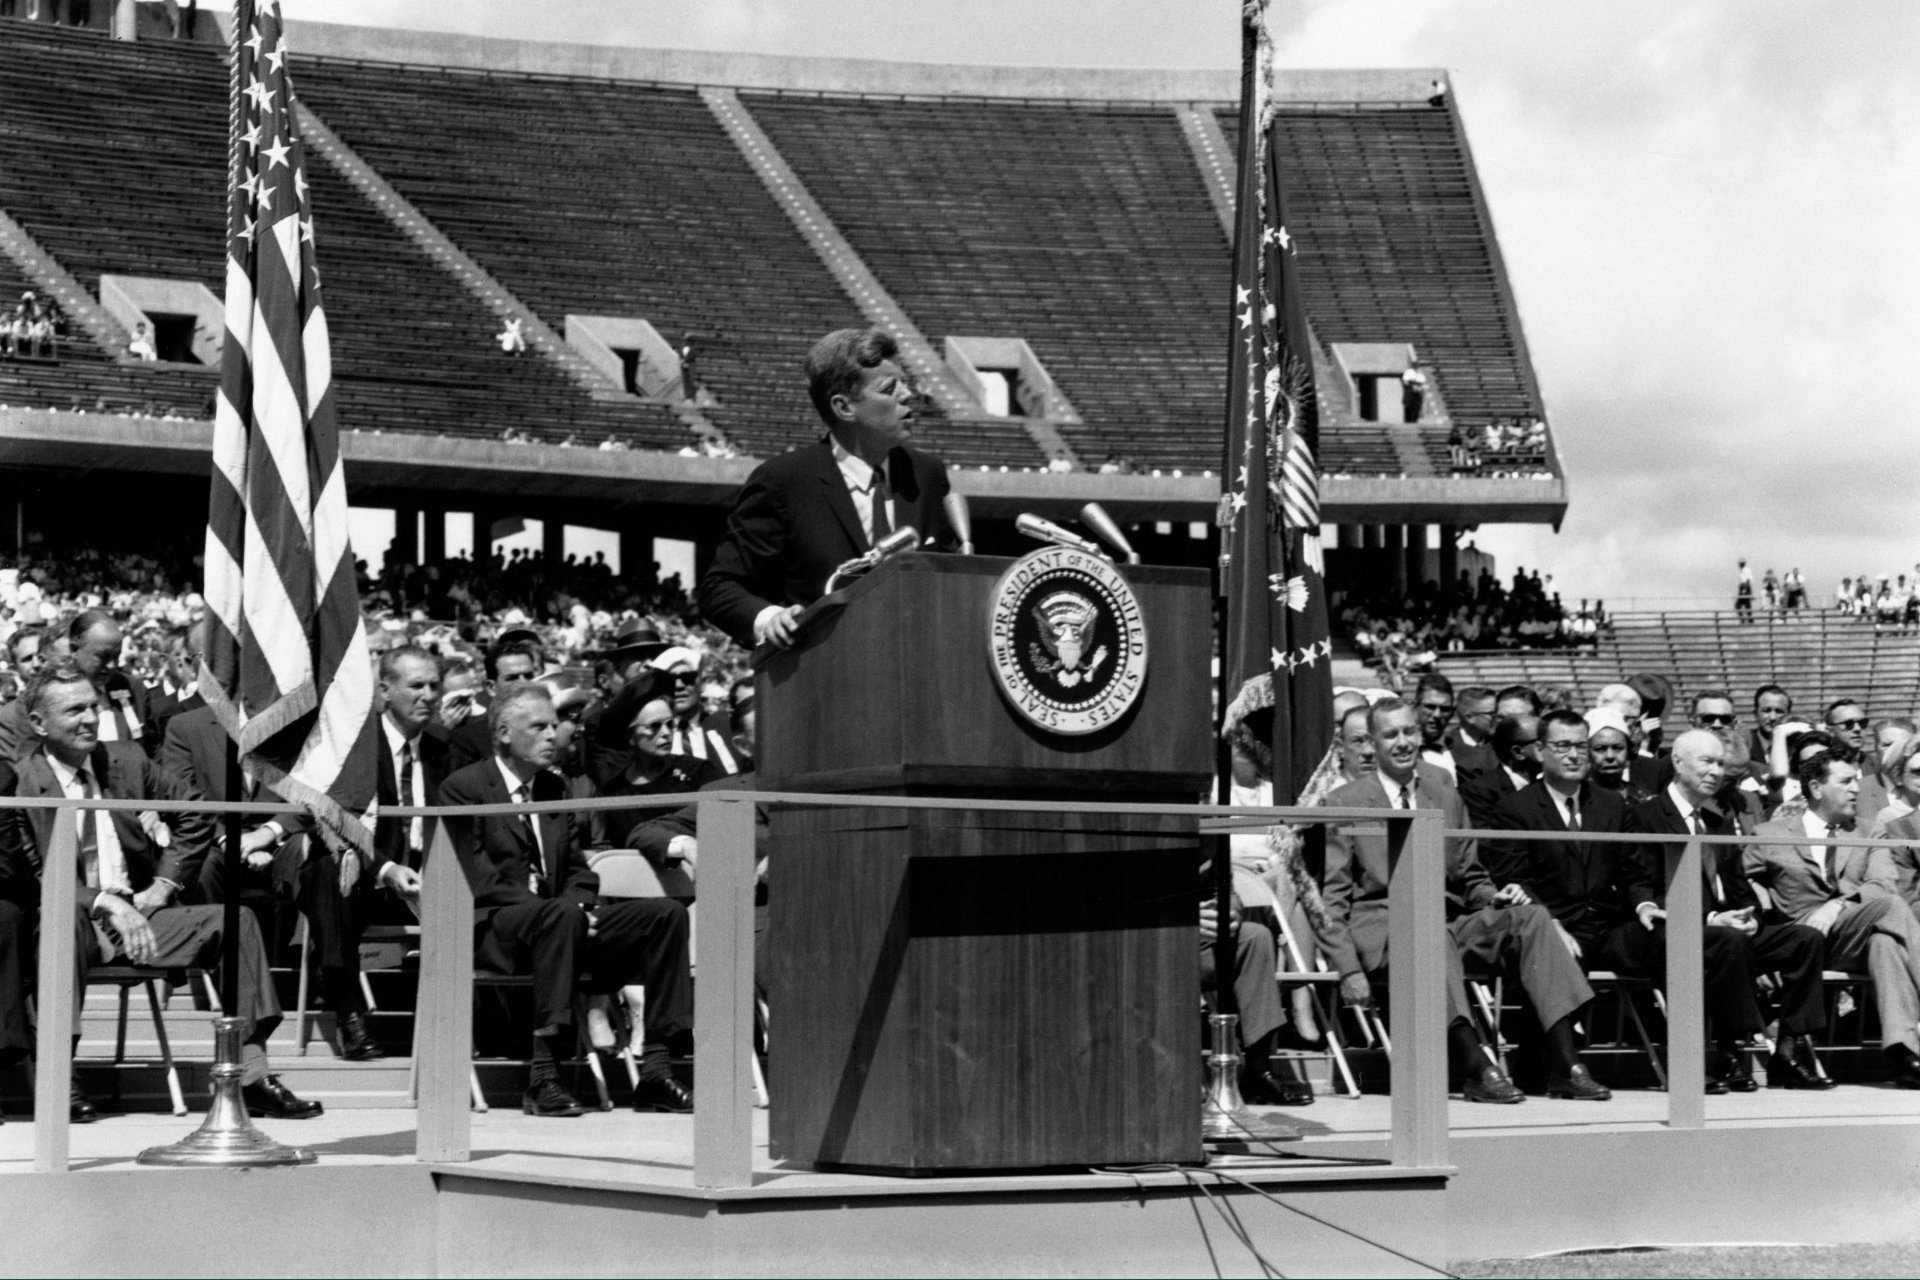 President Kennedy speaking at Rice University